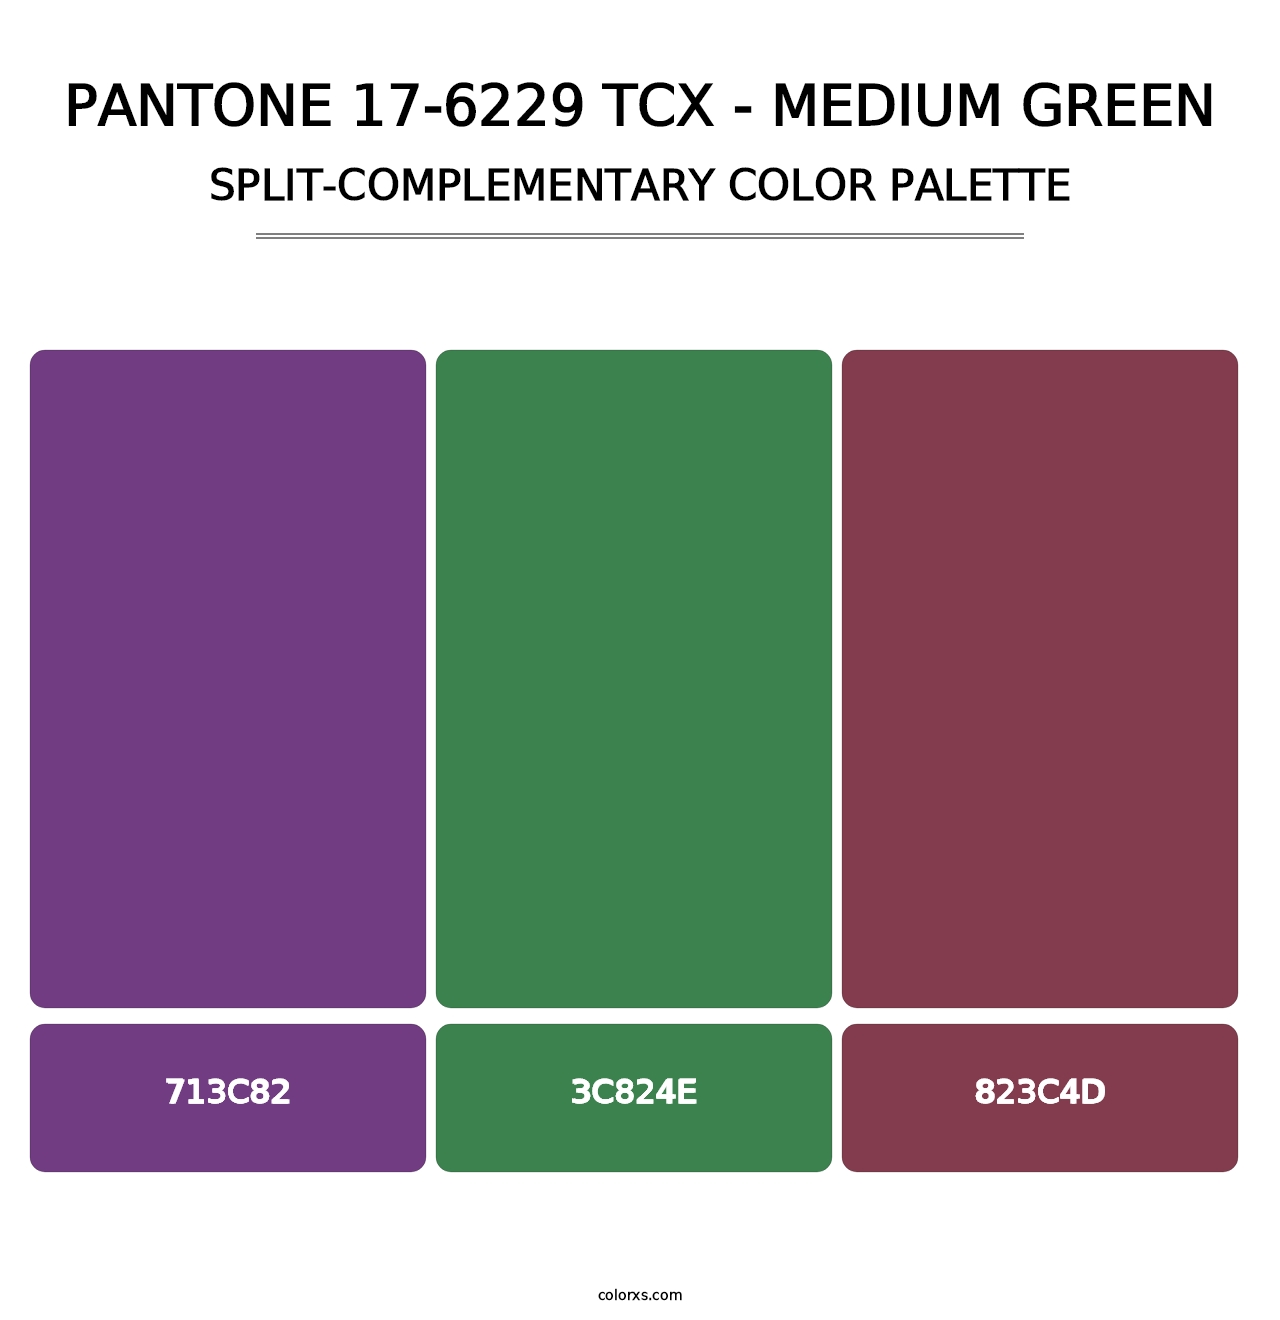 PANTONE 17-6229 TCX - Medium Green - Split-Complementary Color Palette